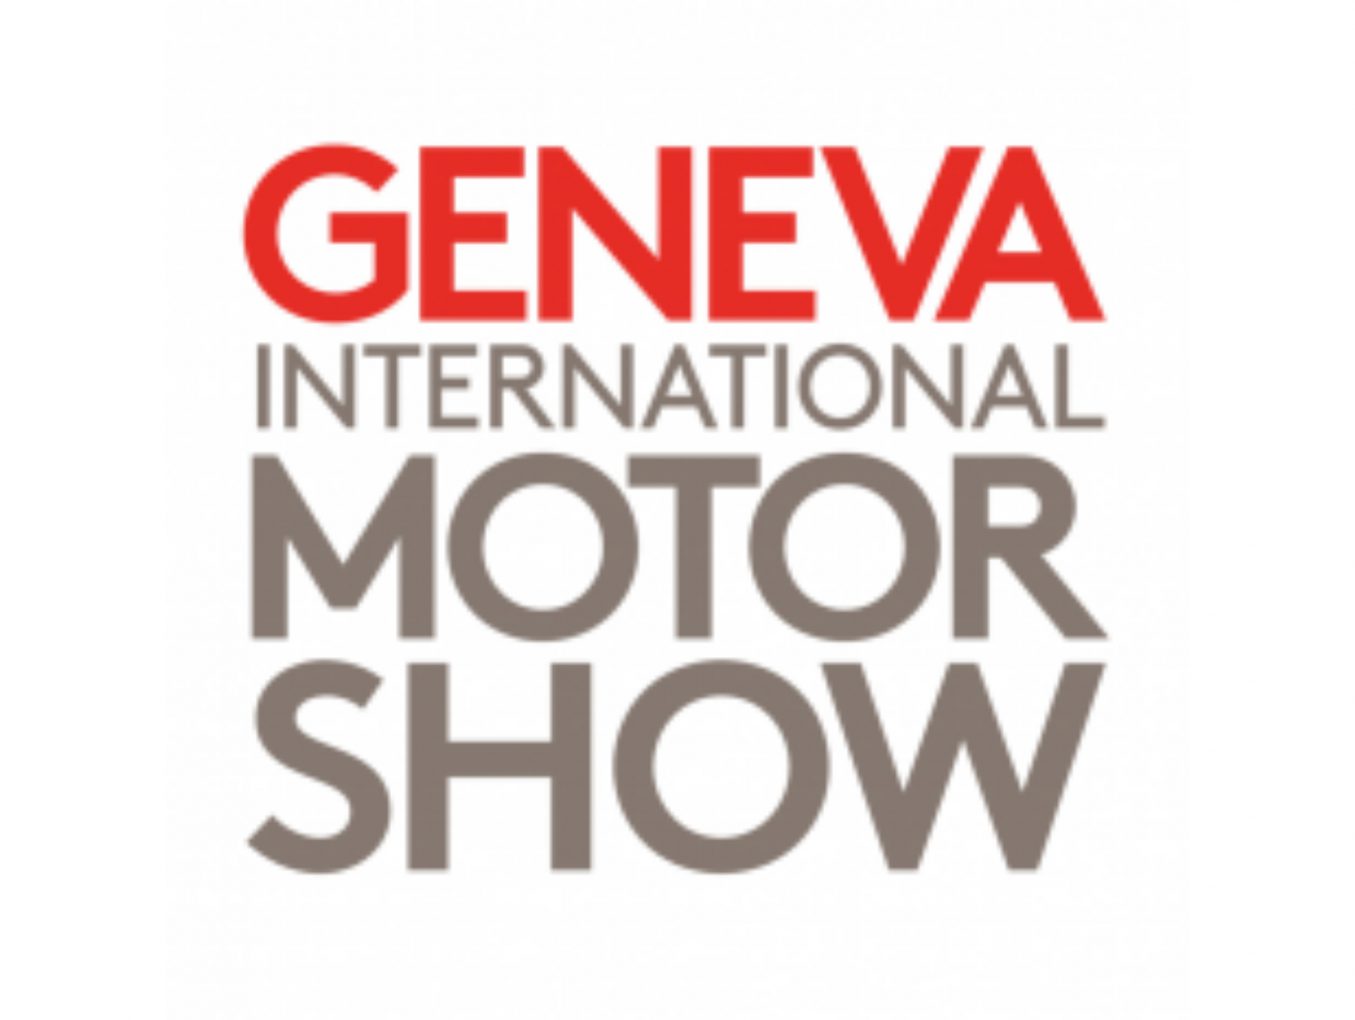 Special offer Geneva Motorshow 2019